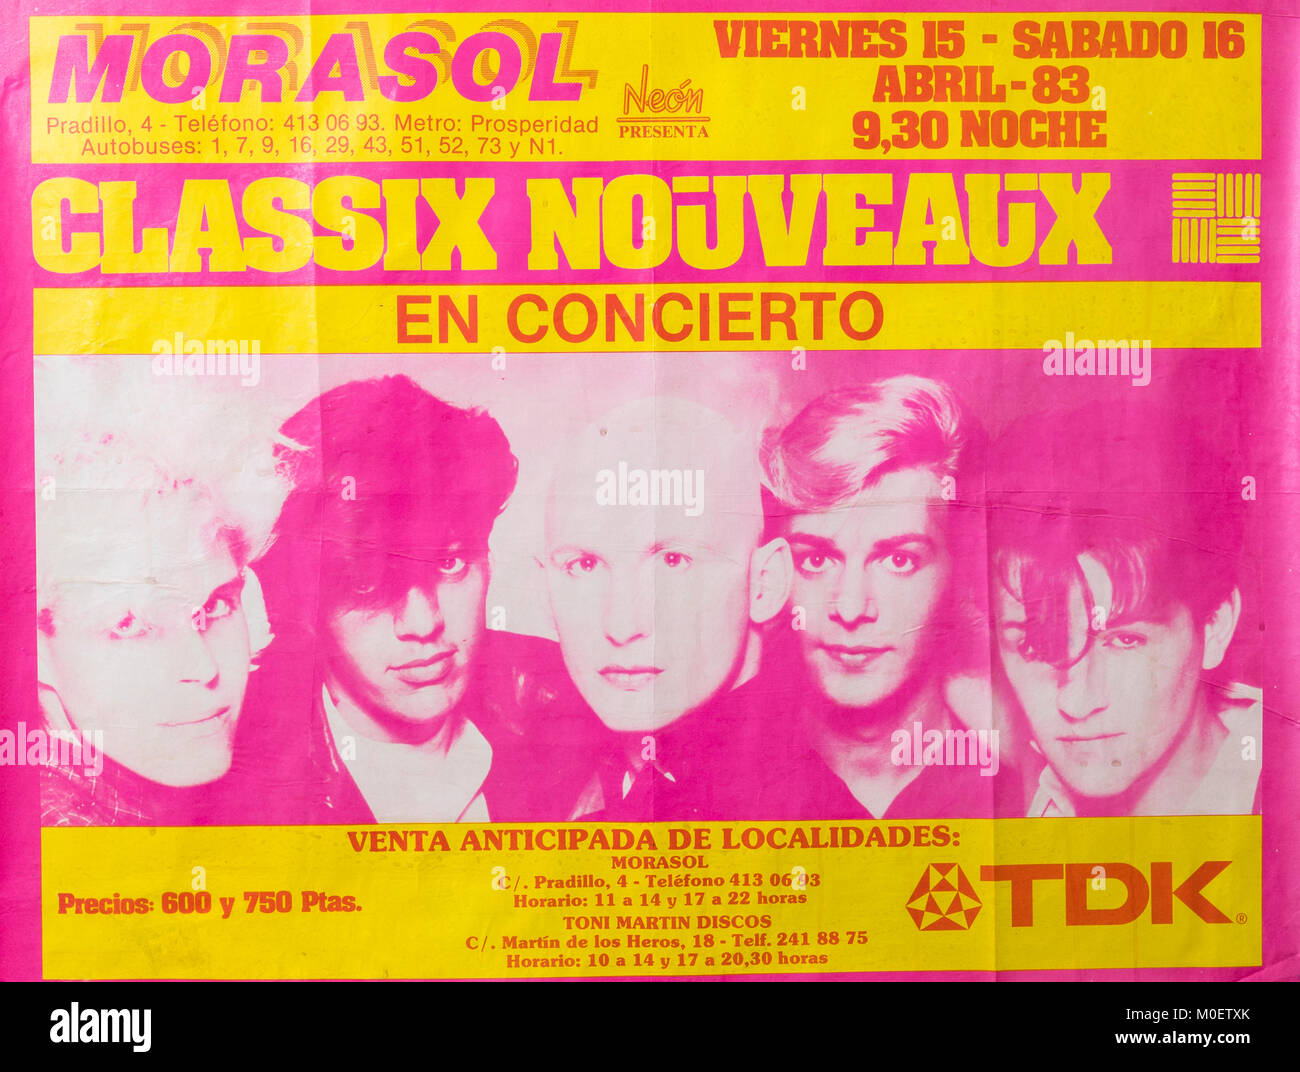 Classix Nouveaux in concert, Madrid Morasol April 1983. Musical concert poster Stock Photo